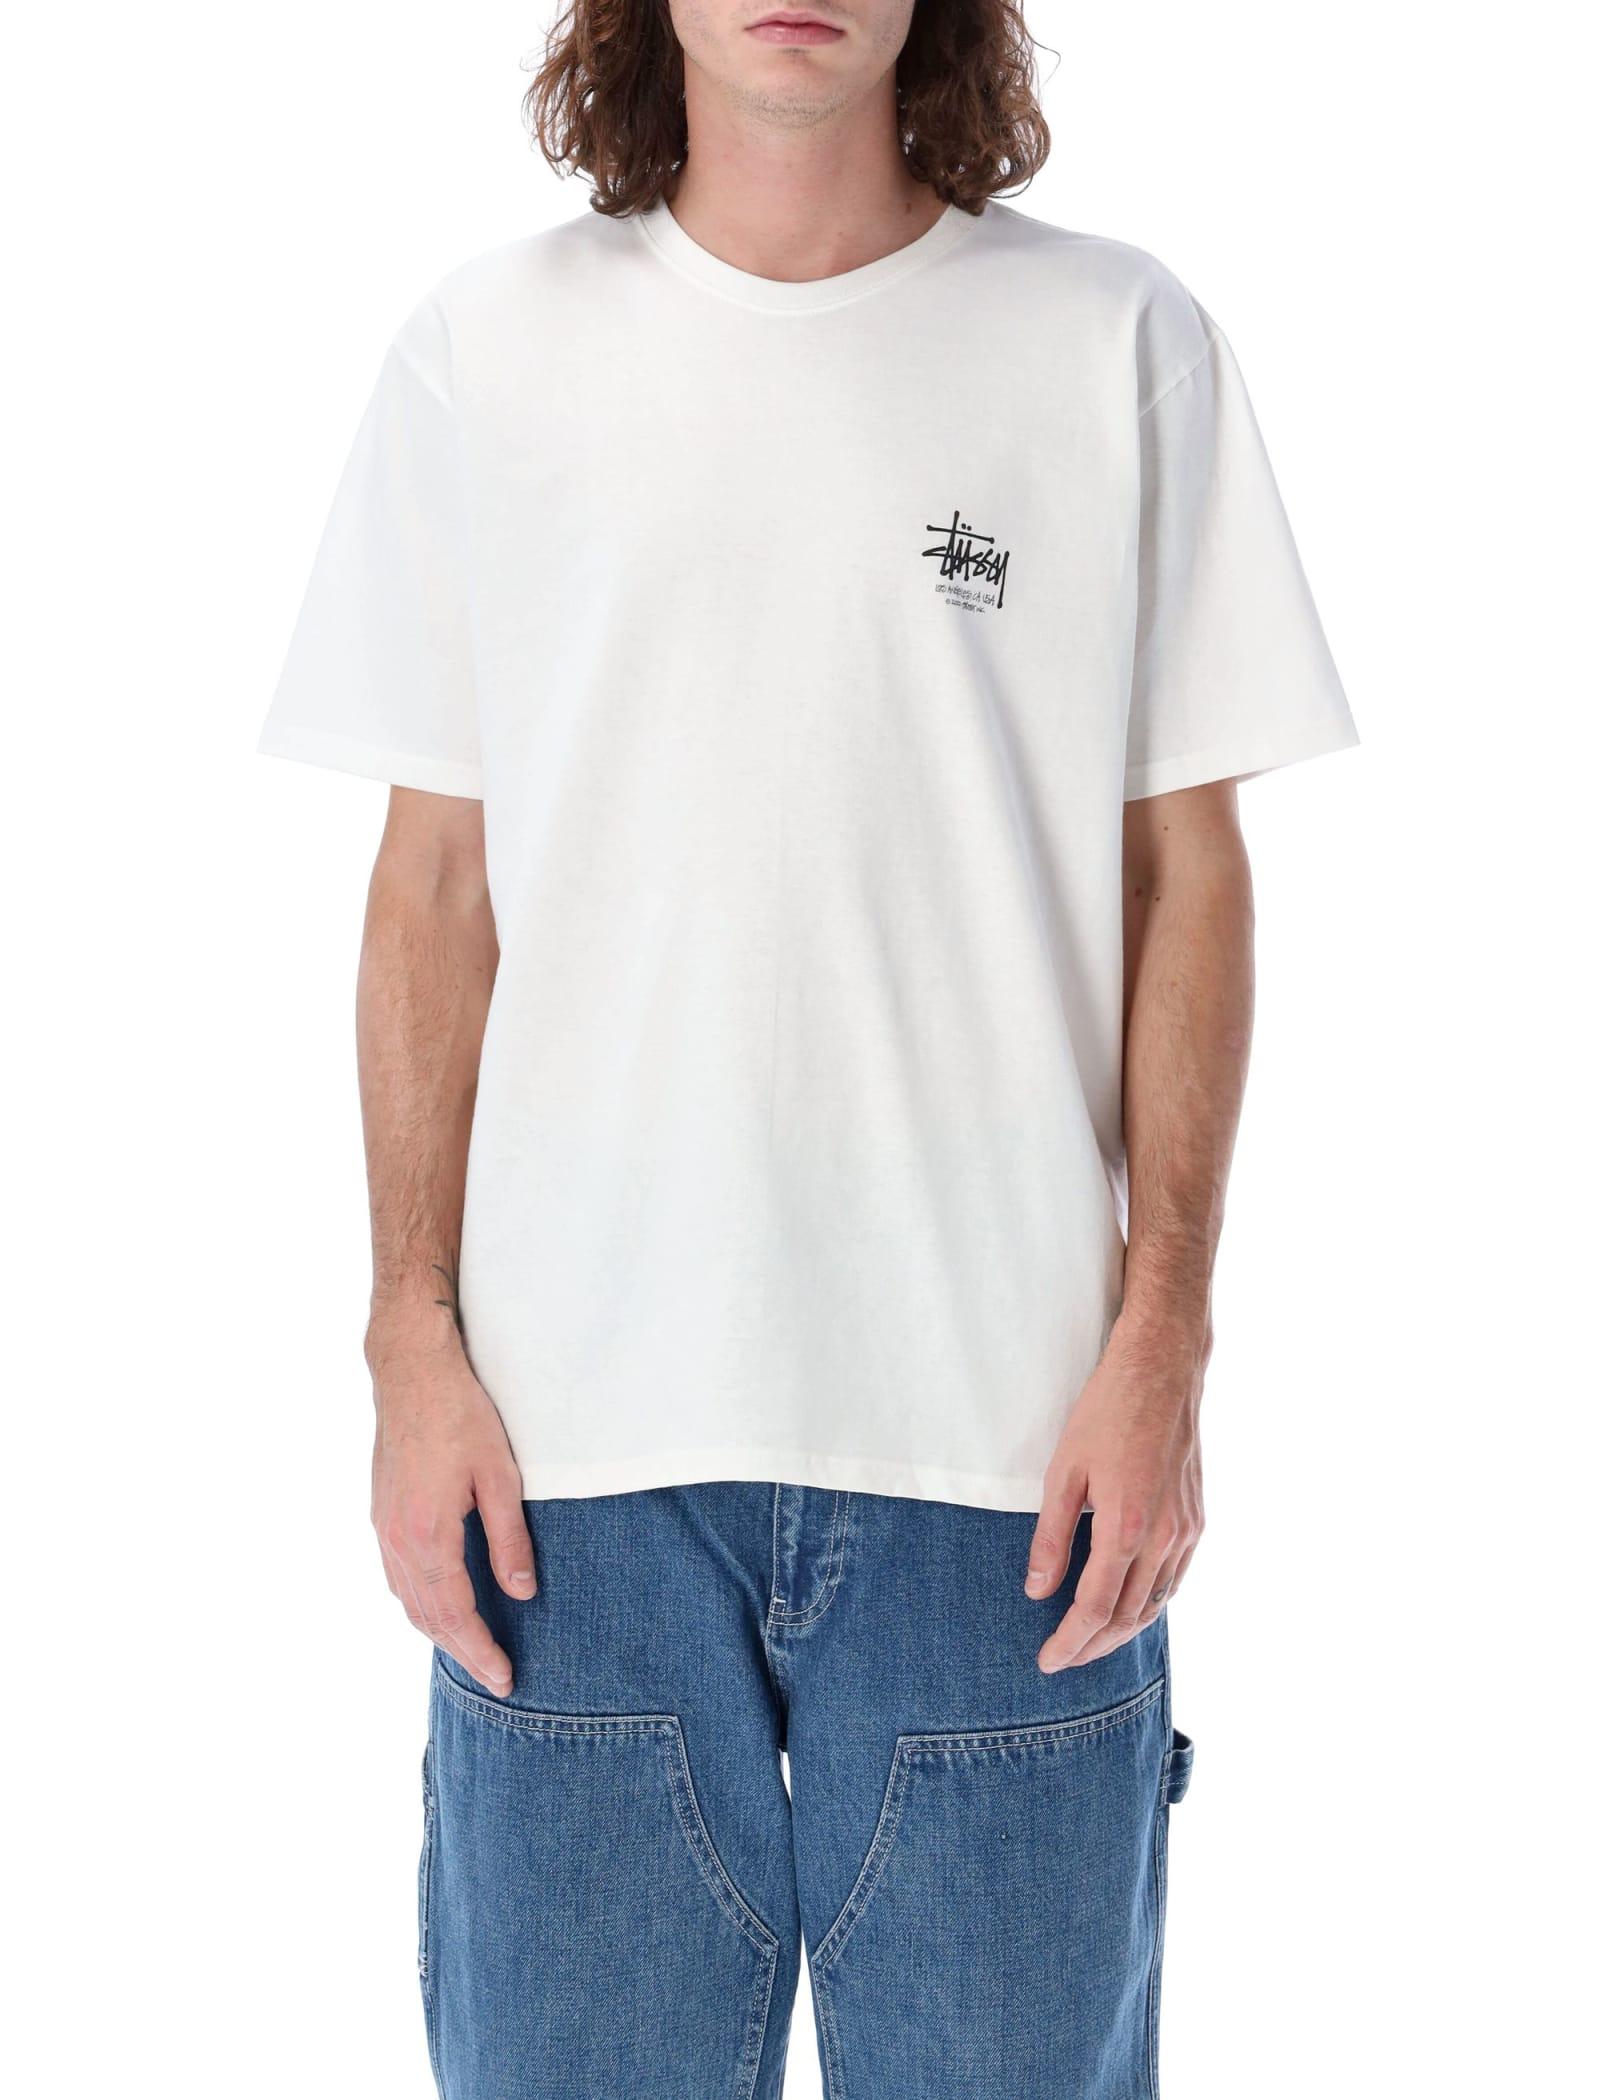 Human Made China Store Exclusive Dragon T-Shirt White